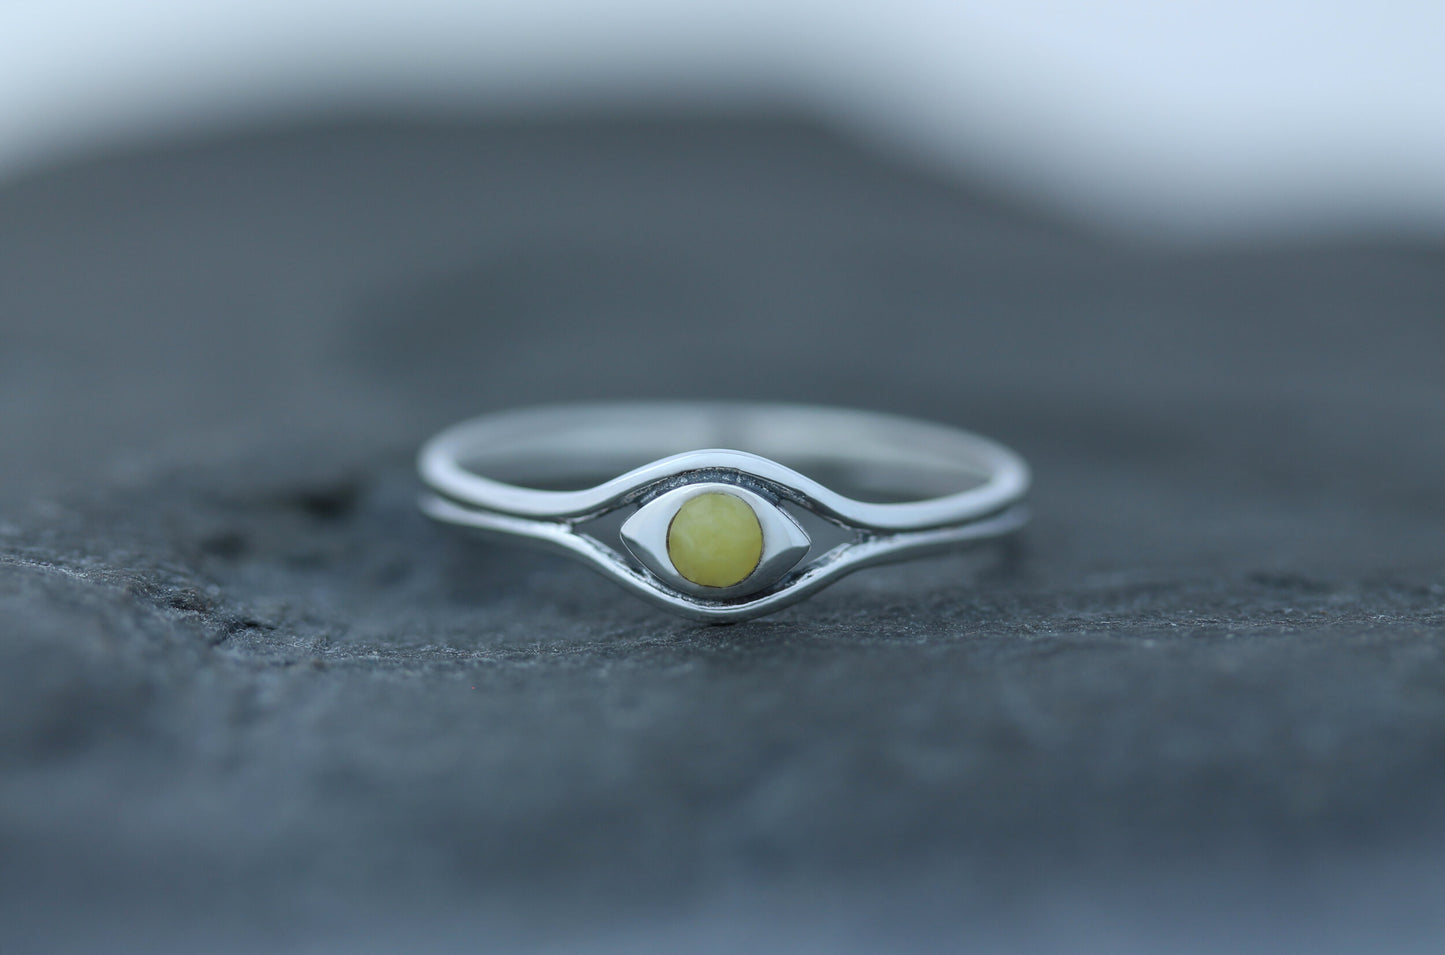 Scottish Marble Ring - The Eye